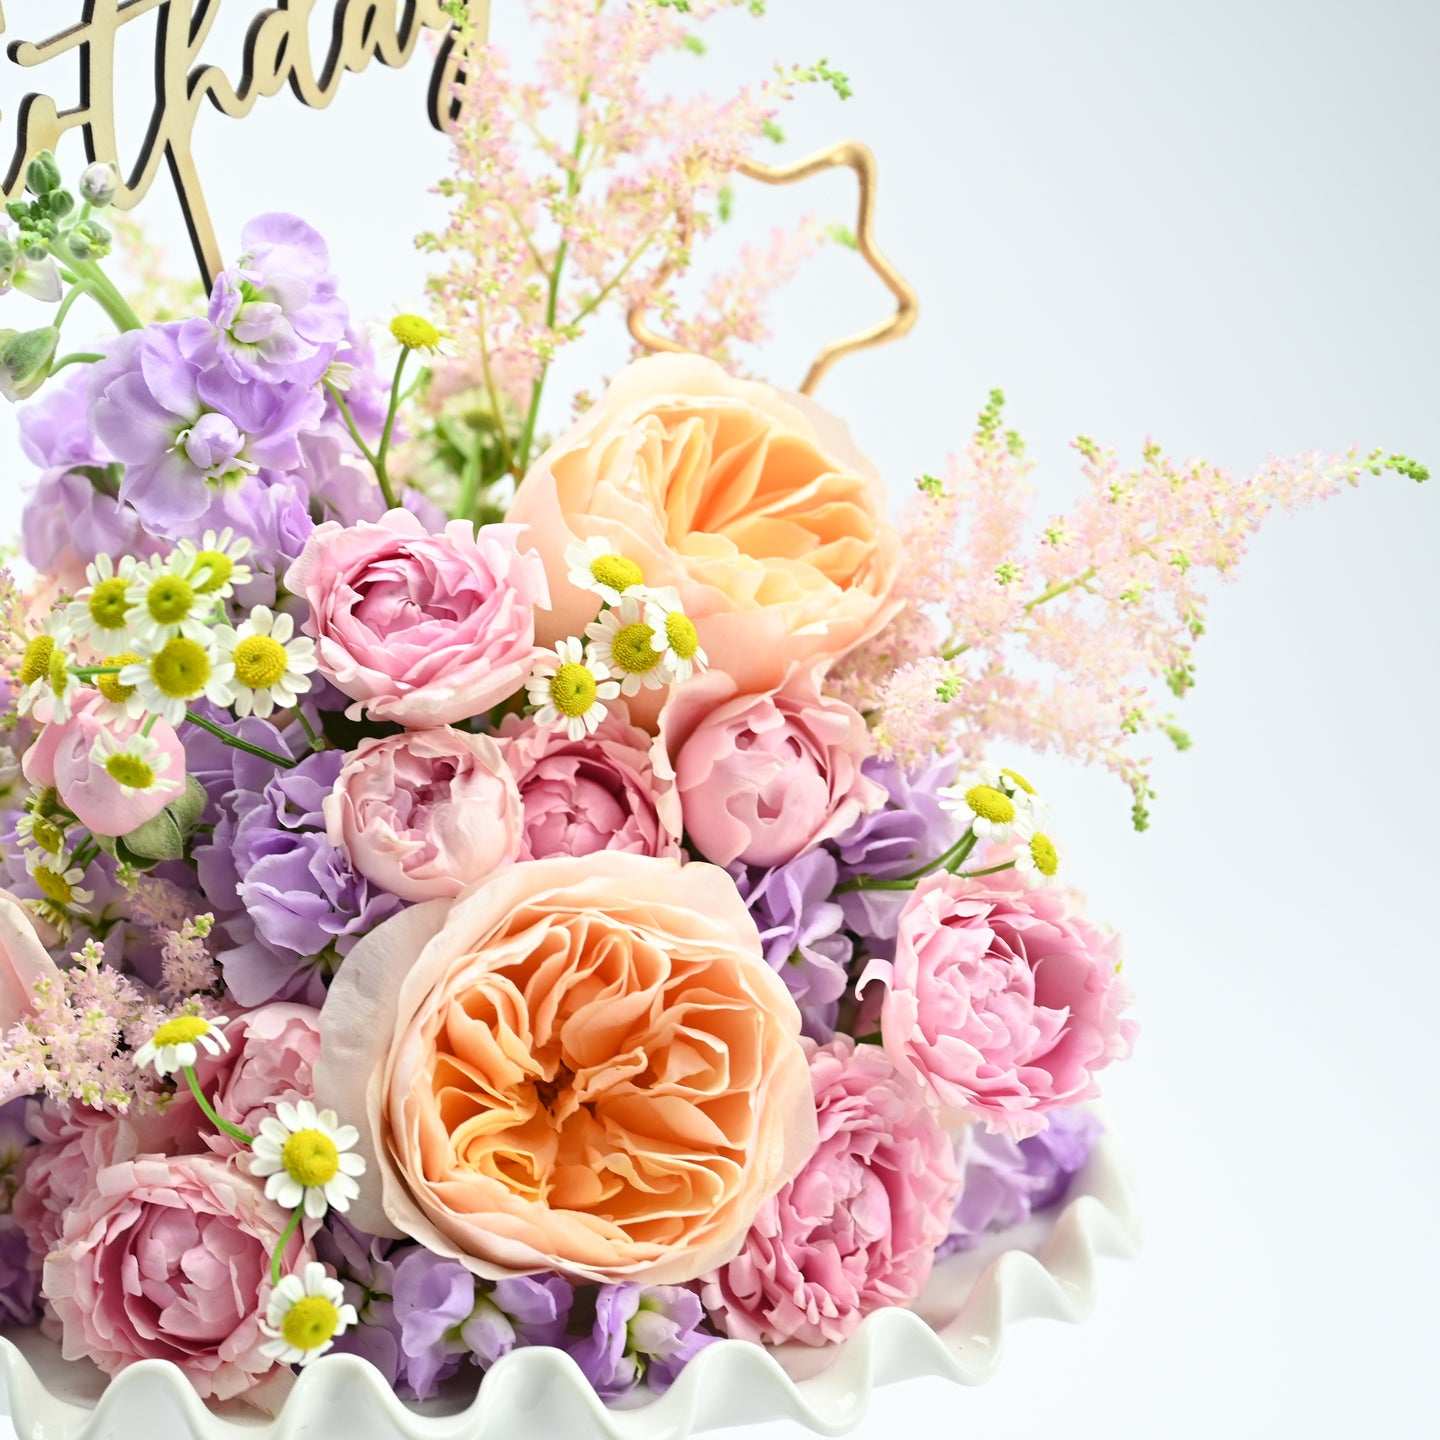 Happy Birthday Flower Cake in Moneta, VA - SMITH MOUNTAIN FLOWERS